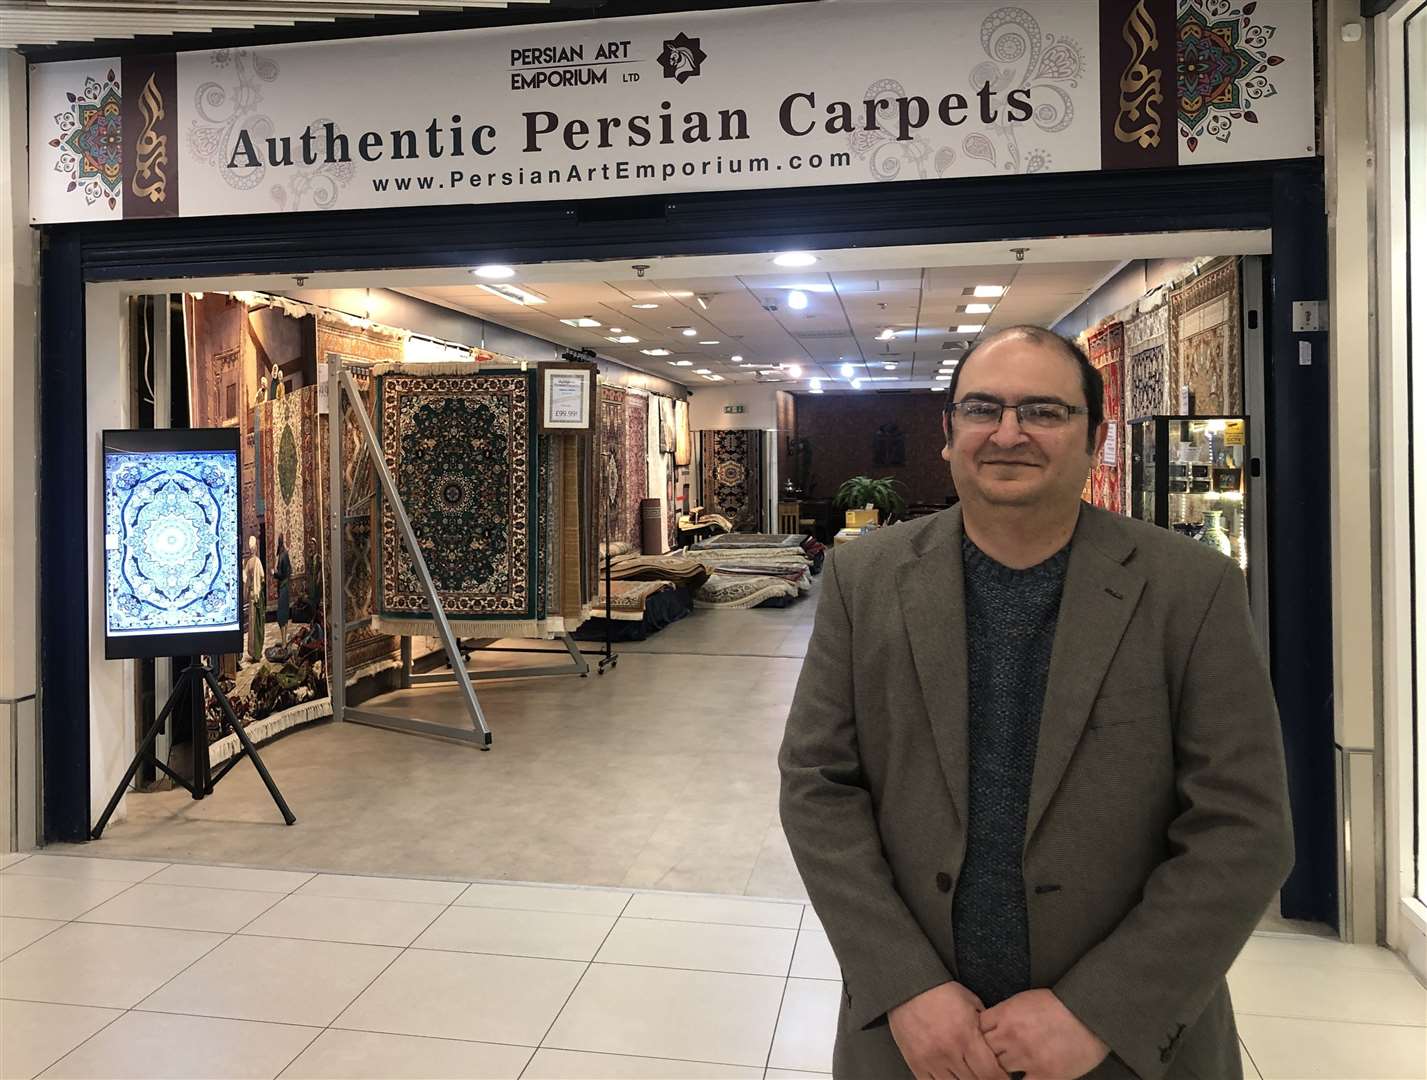 Reza Tabibi, owner of Persian Art Emporium